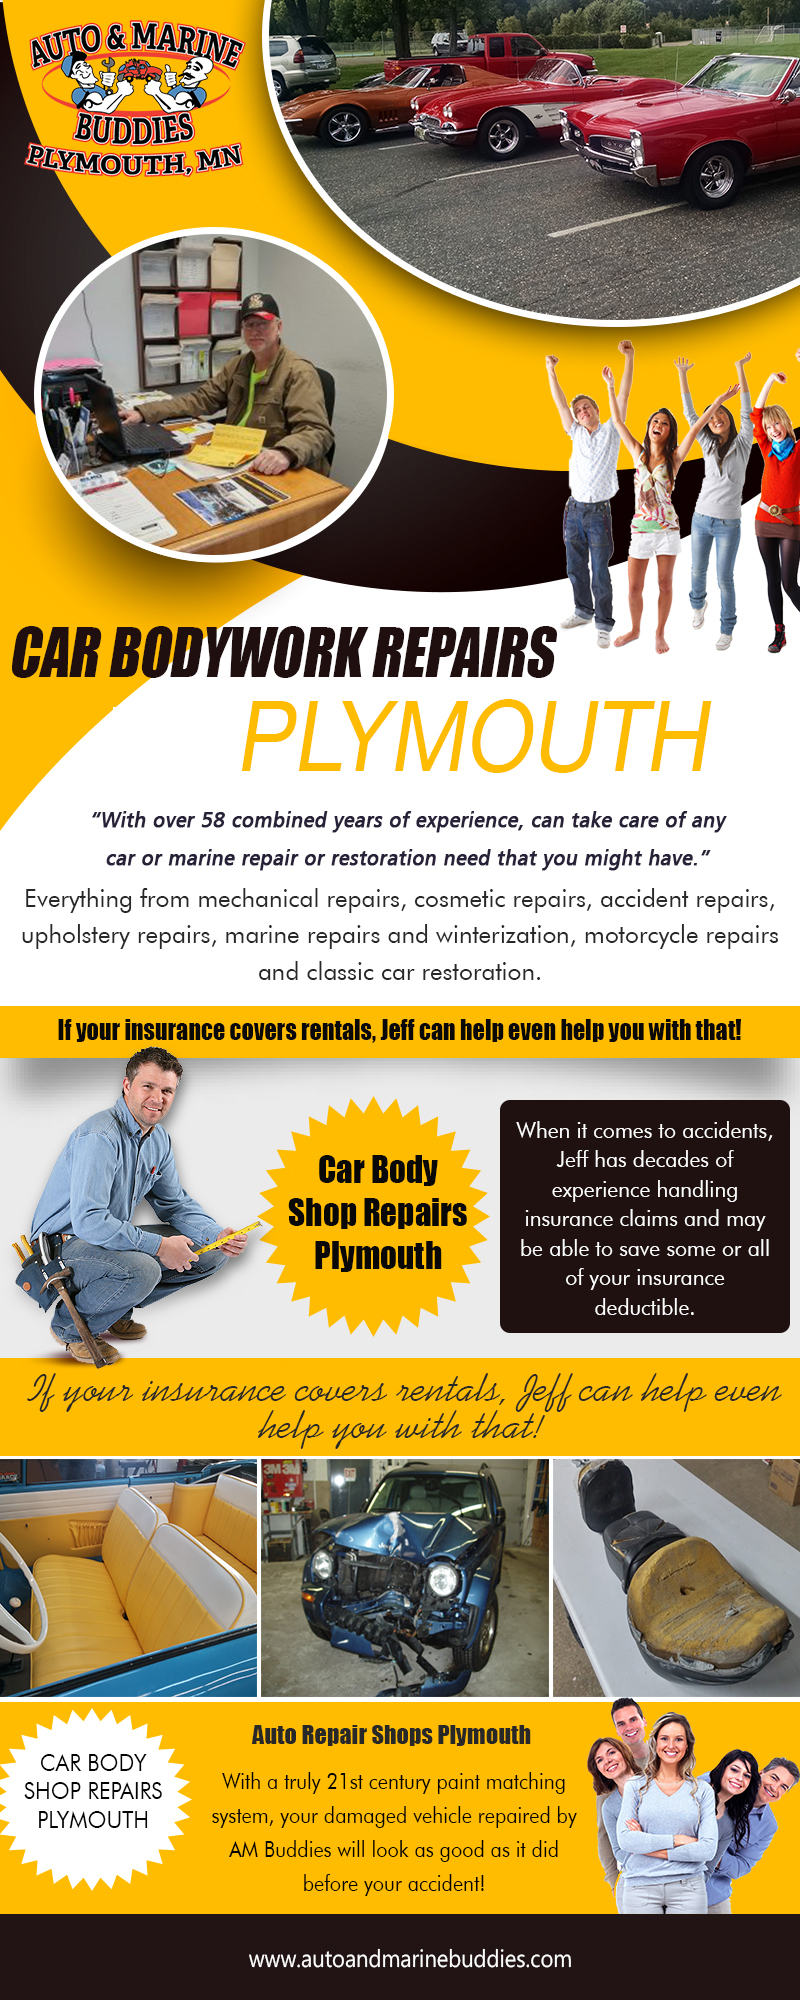 Car Bodywork Repairs Plymouth